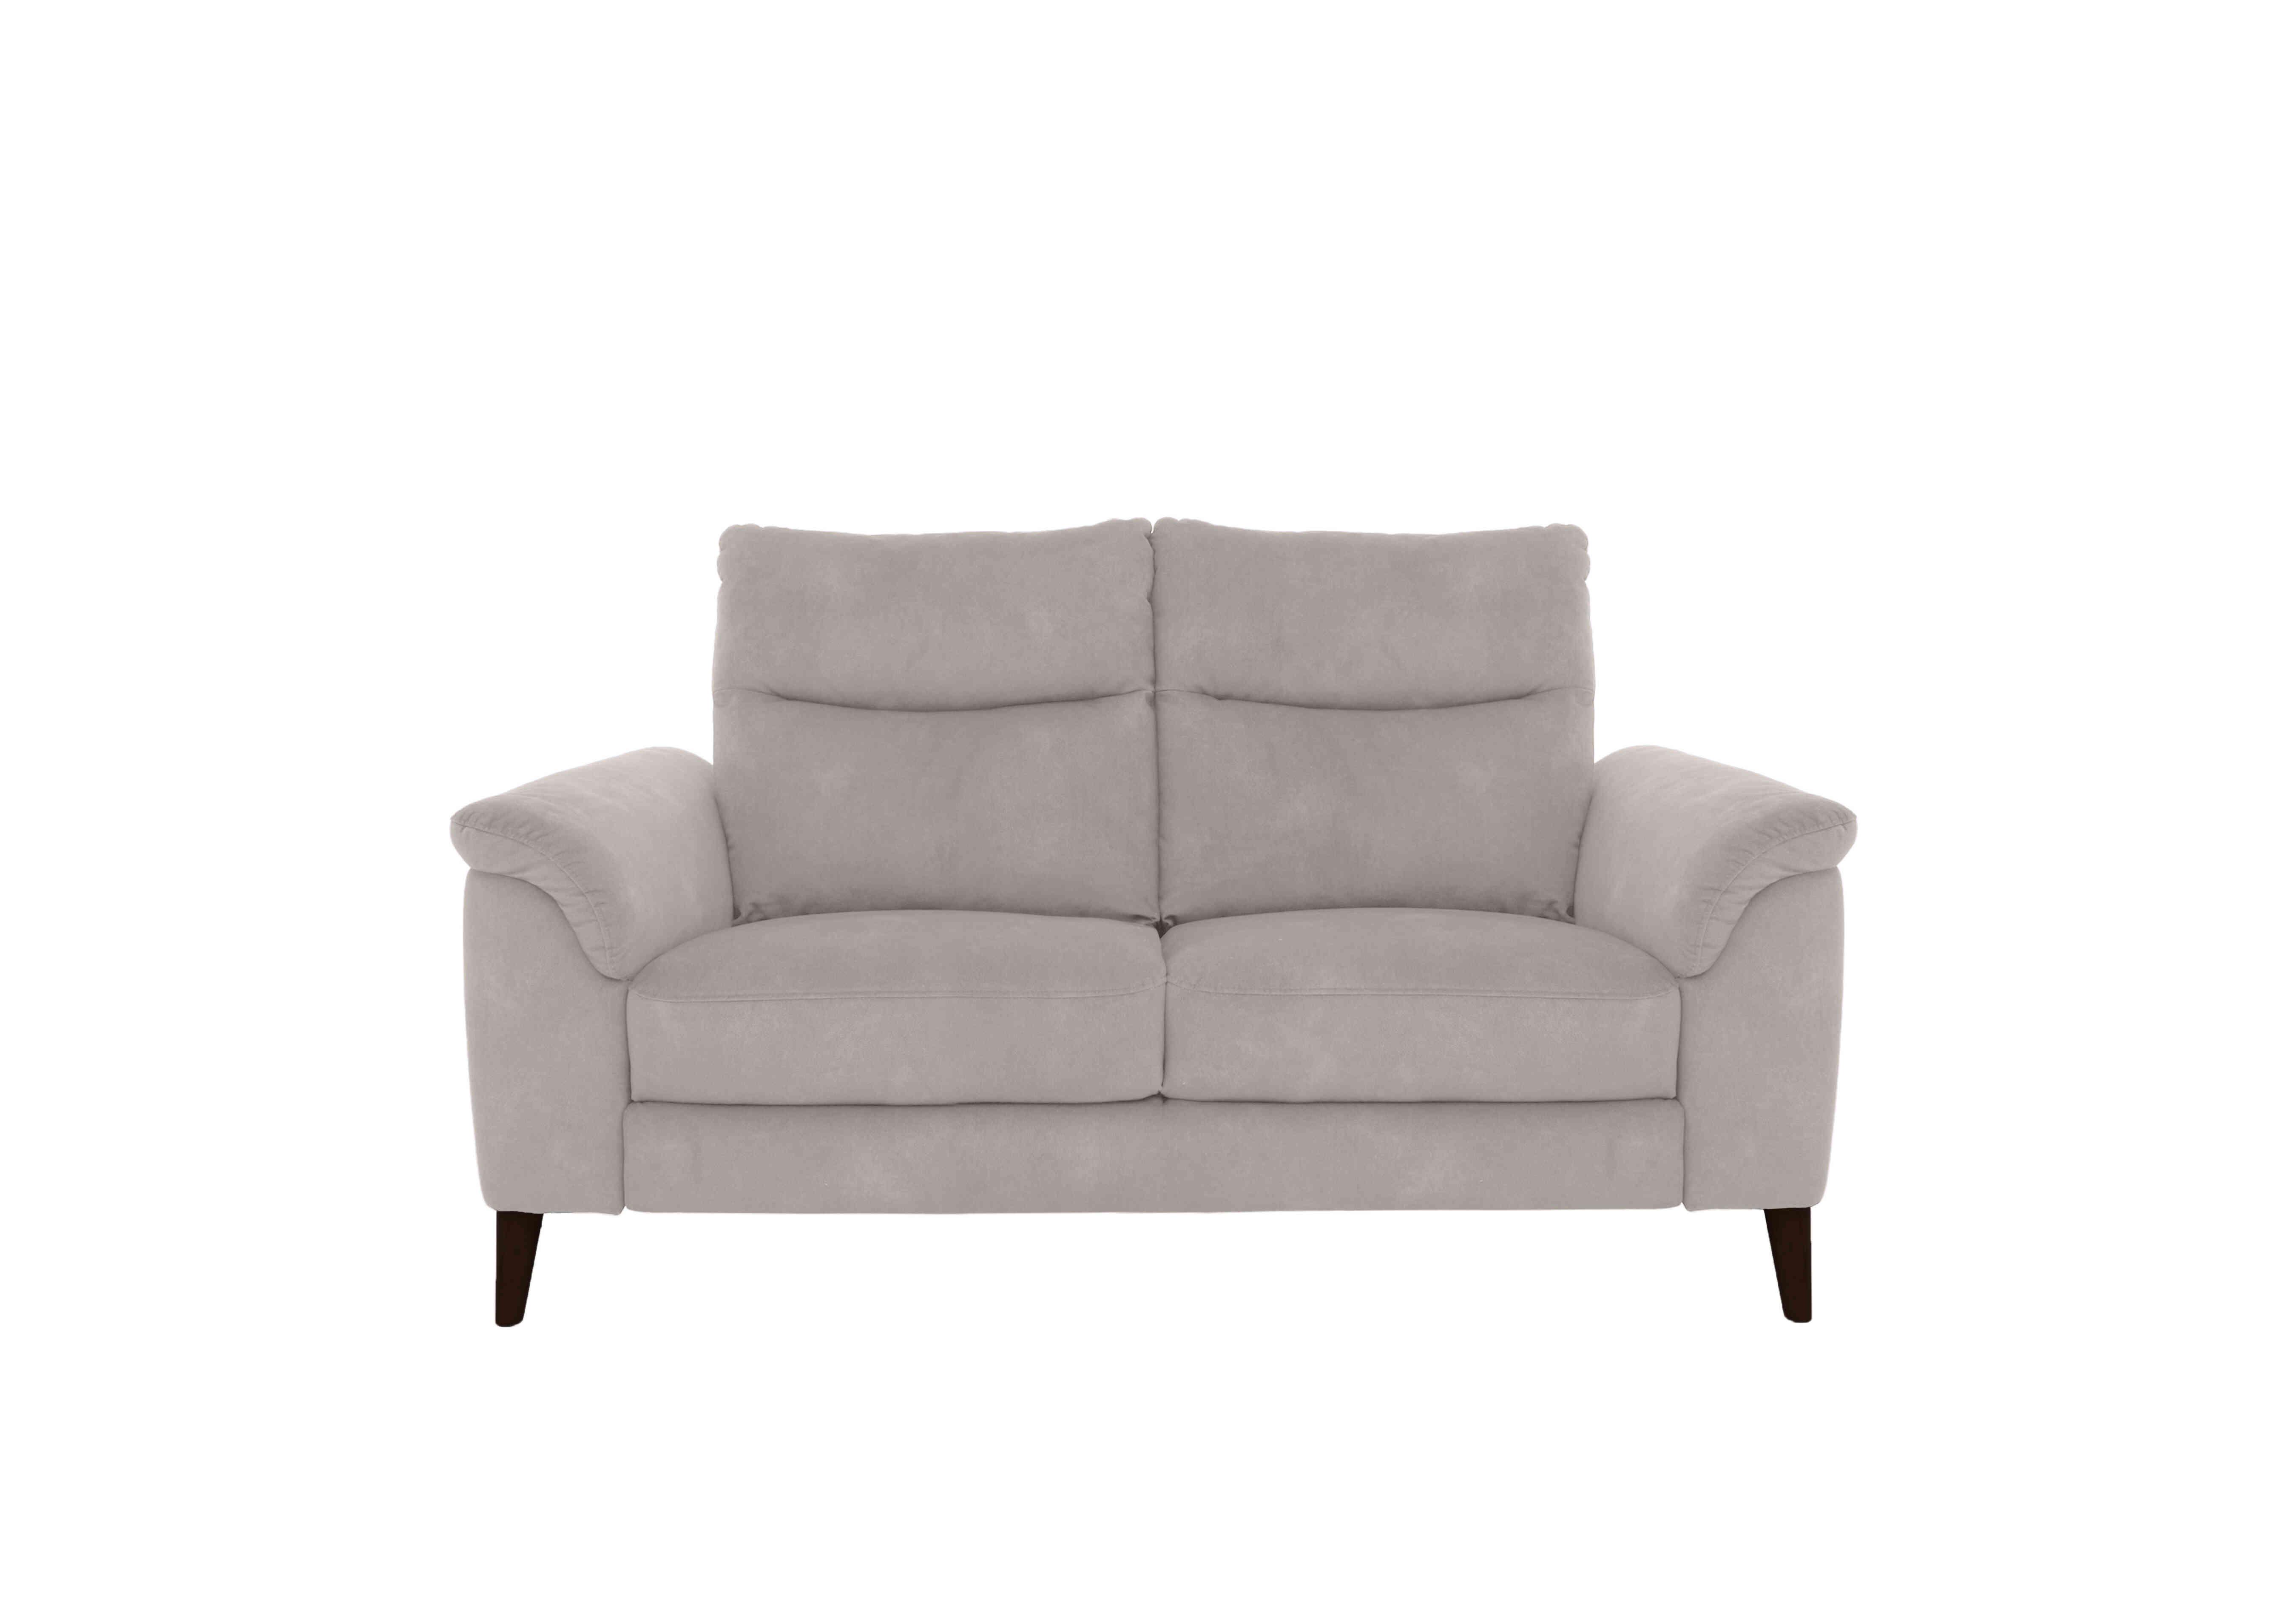 Morgan 2 Seater Fabric Sofa in Stone Dexter 02 43502 on Furniture Village